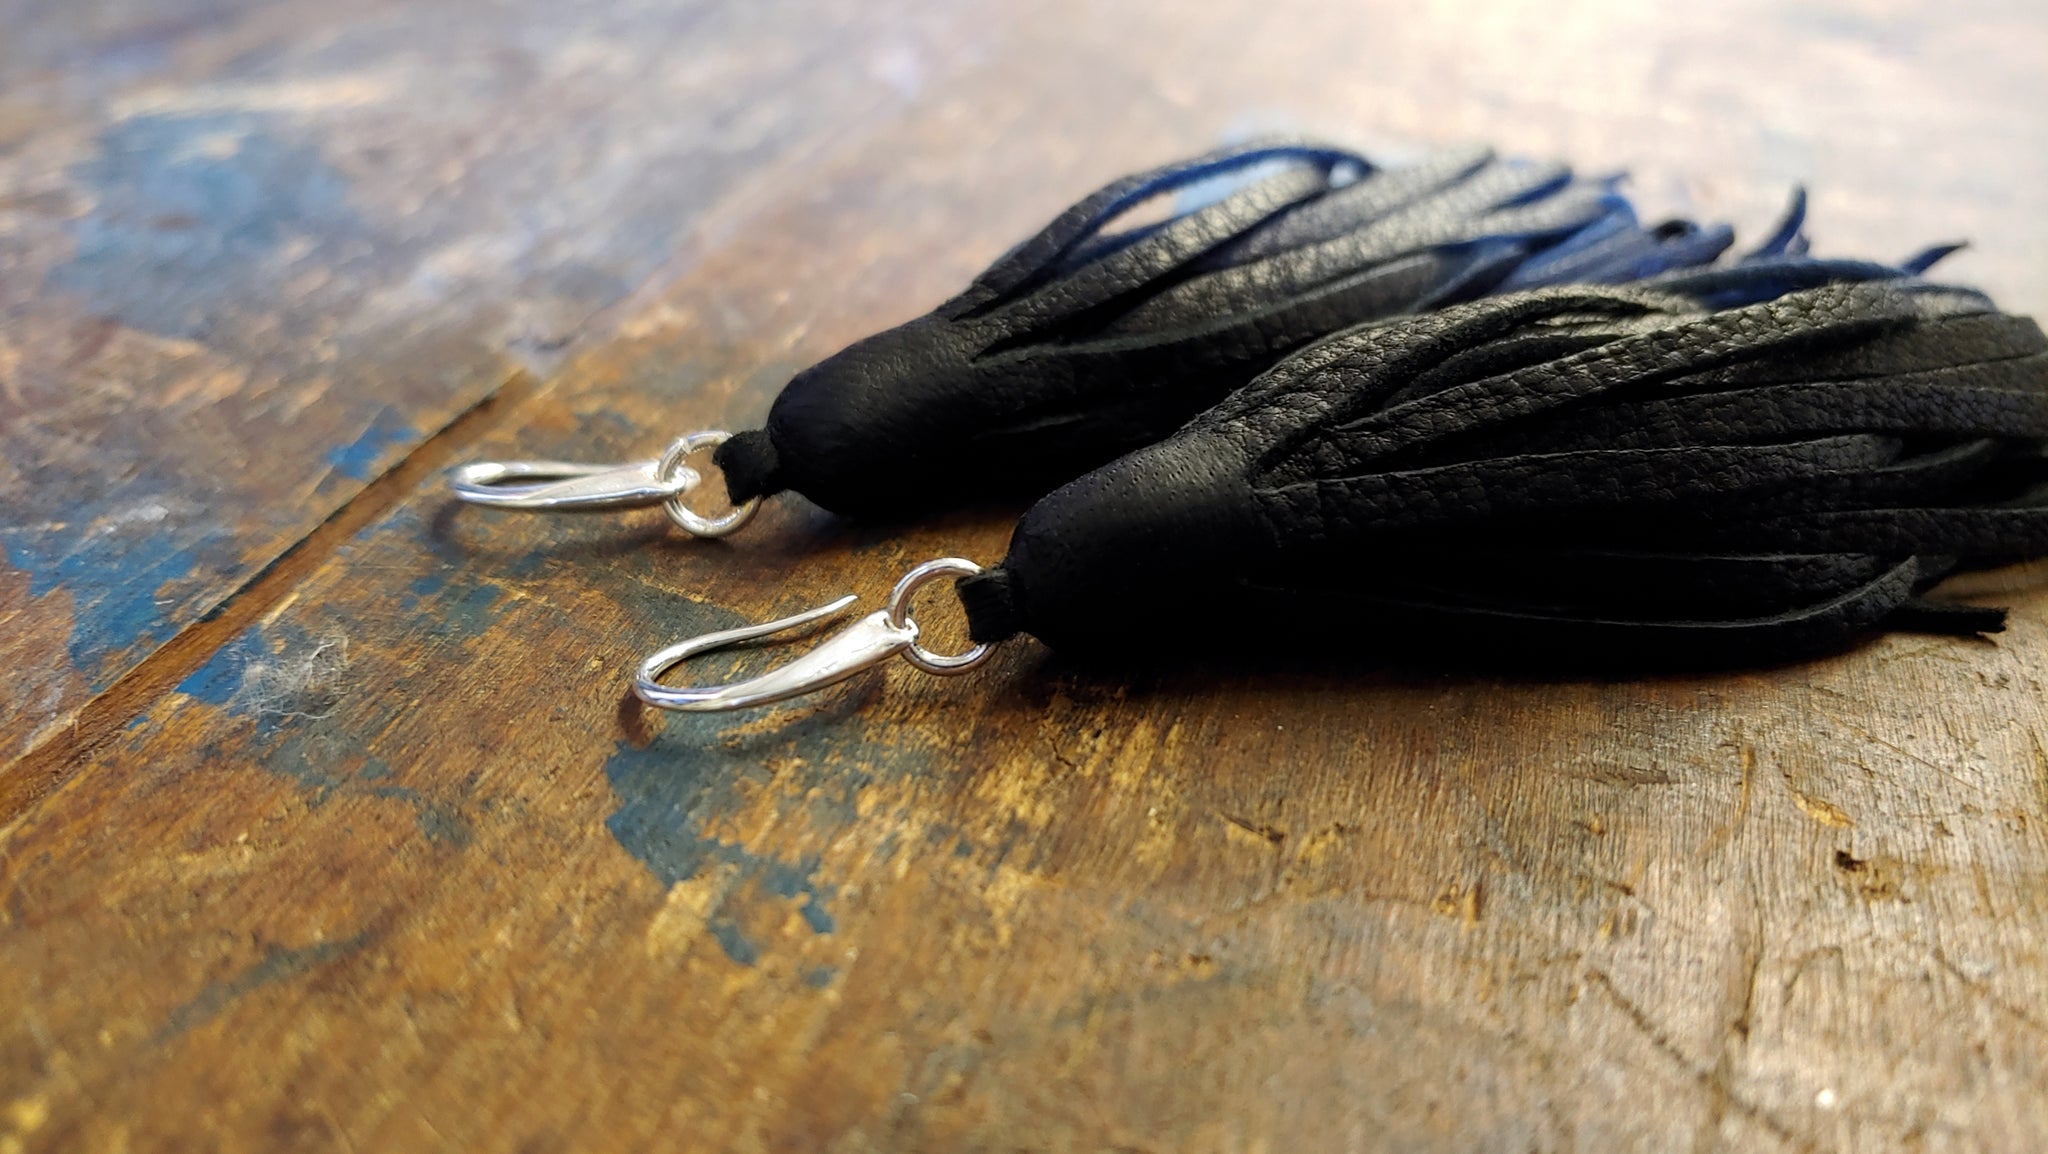 Baby Kimani Tassel Earrings in black Deerskin Leather with Silver Plated Earring Wires - Hook Style